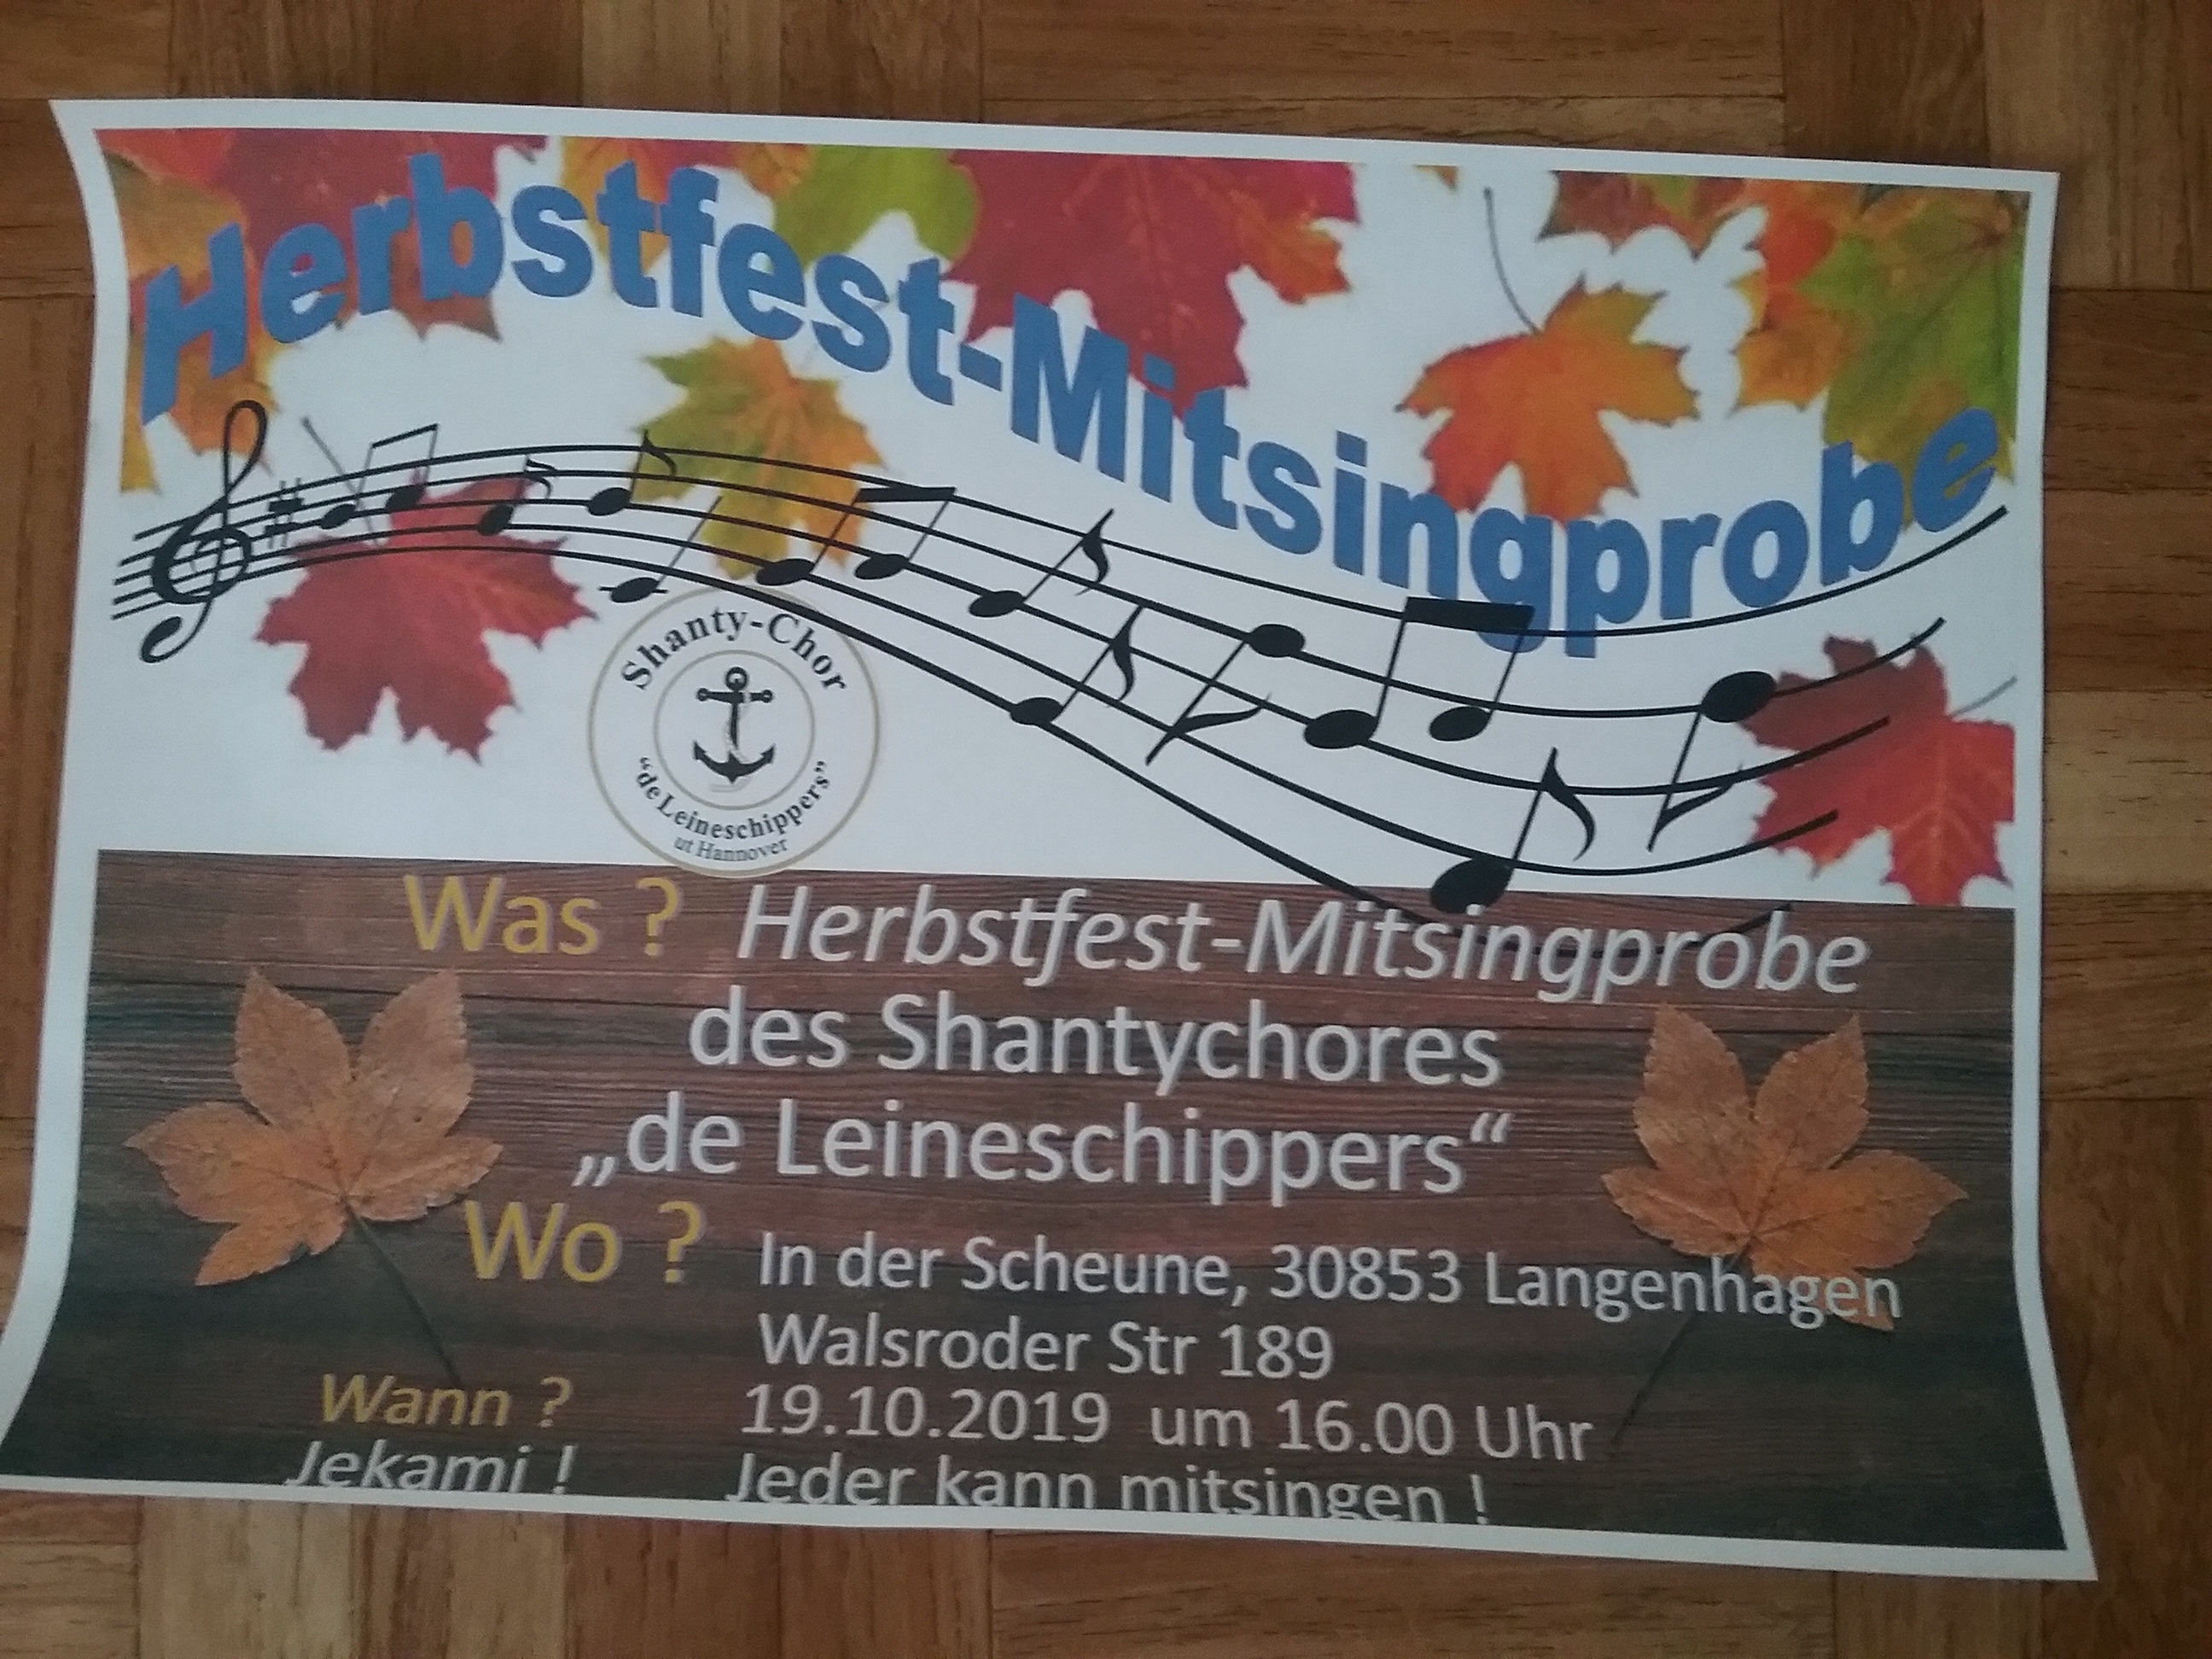 Herbstfest-Mitsingprobe